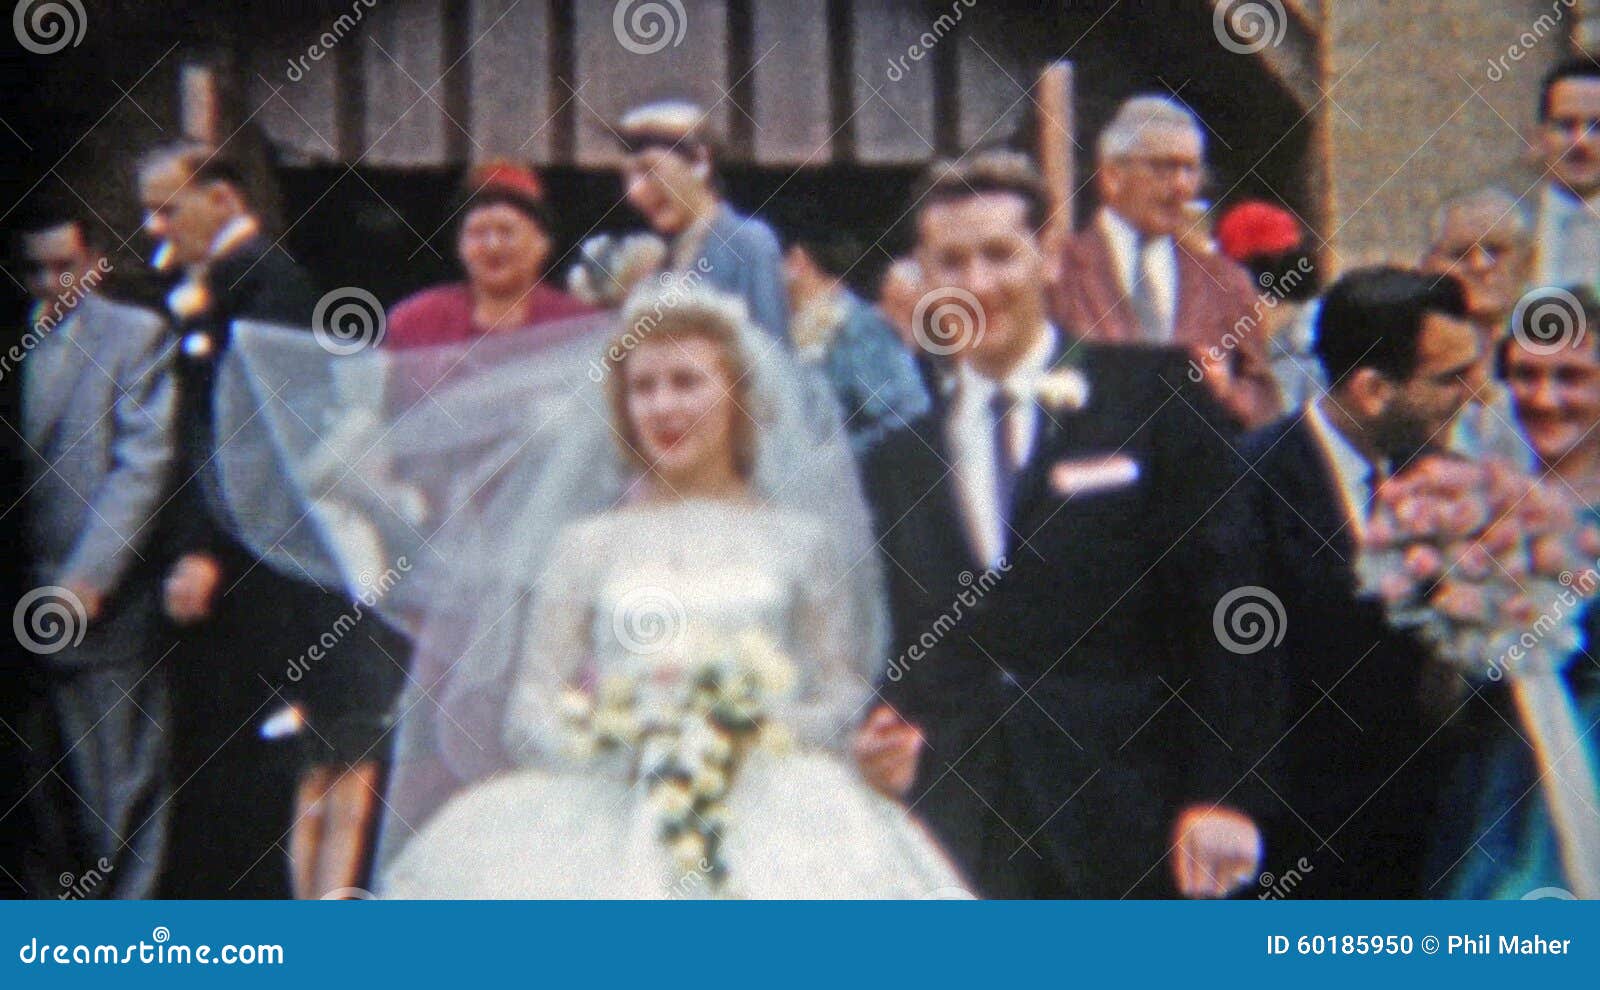 Dress michigan cleaning wedding vintage